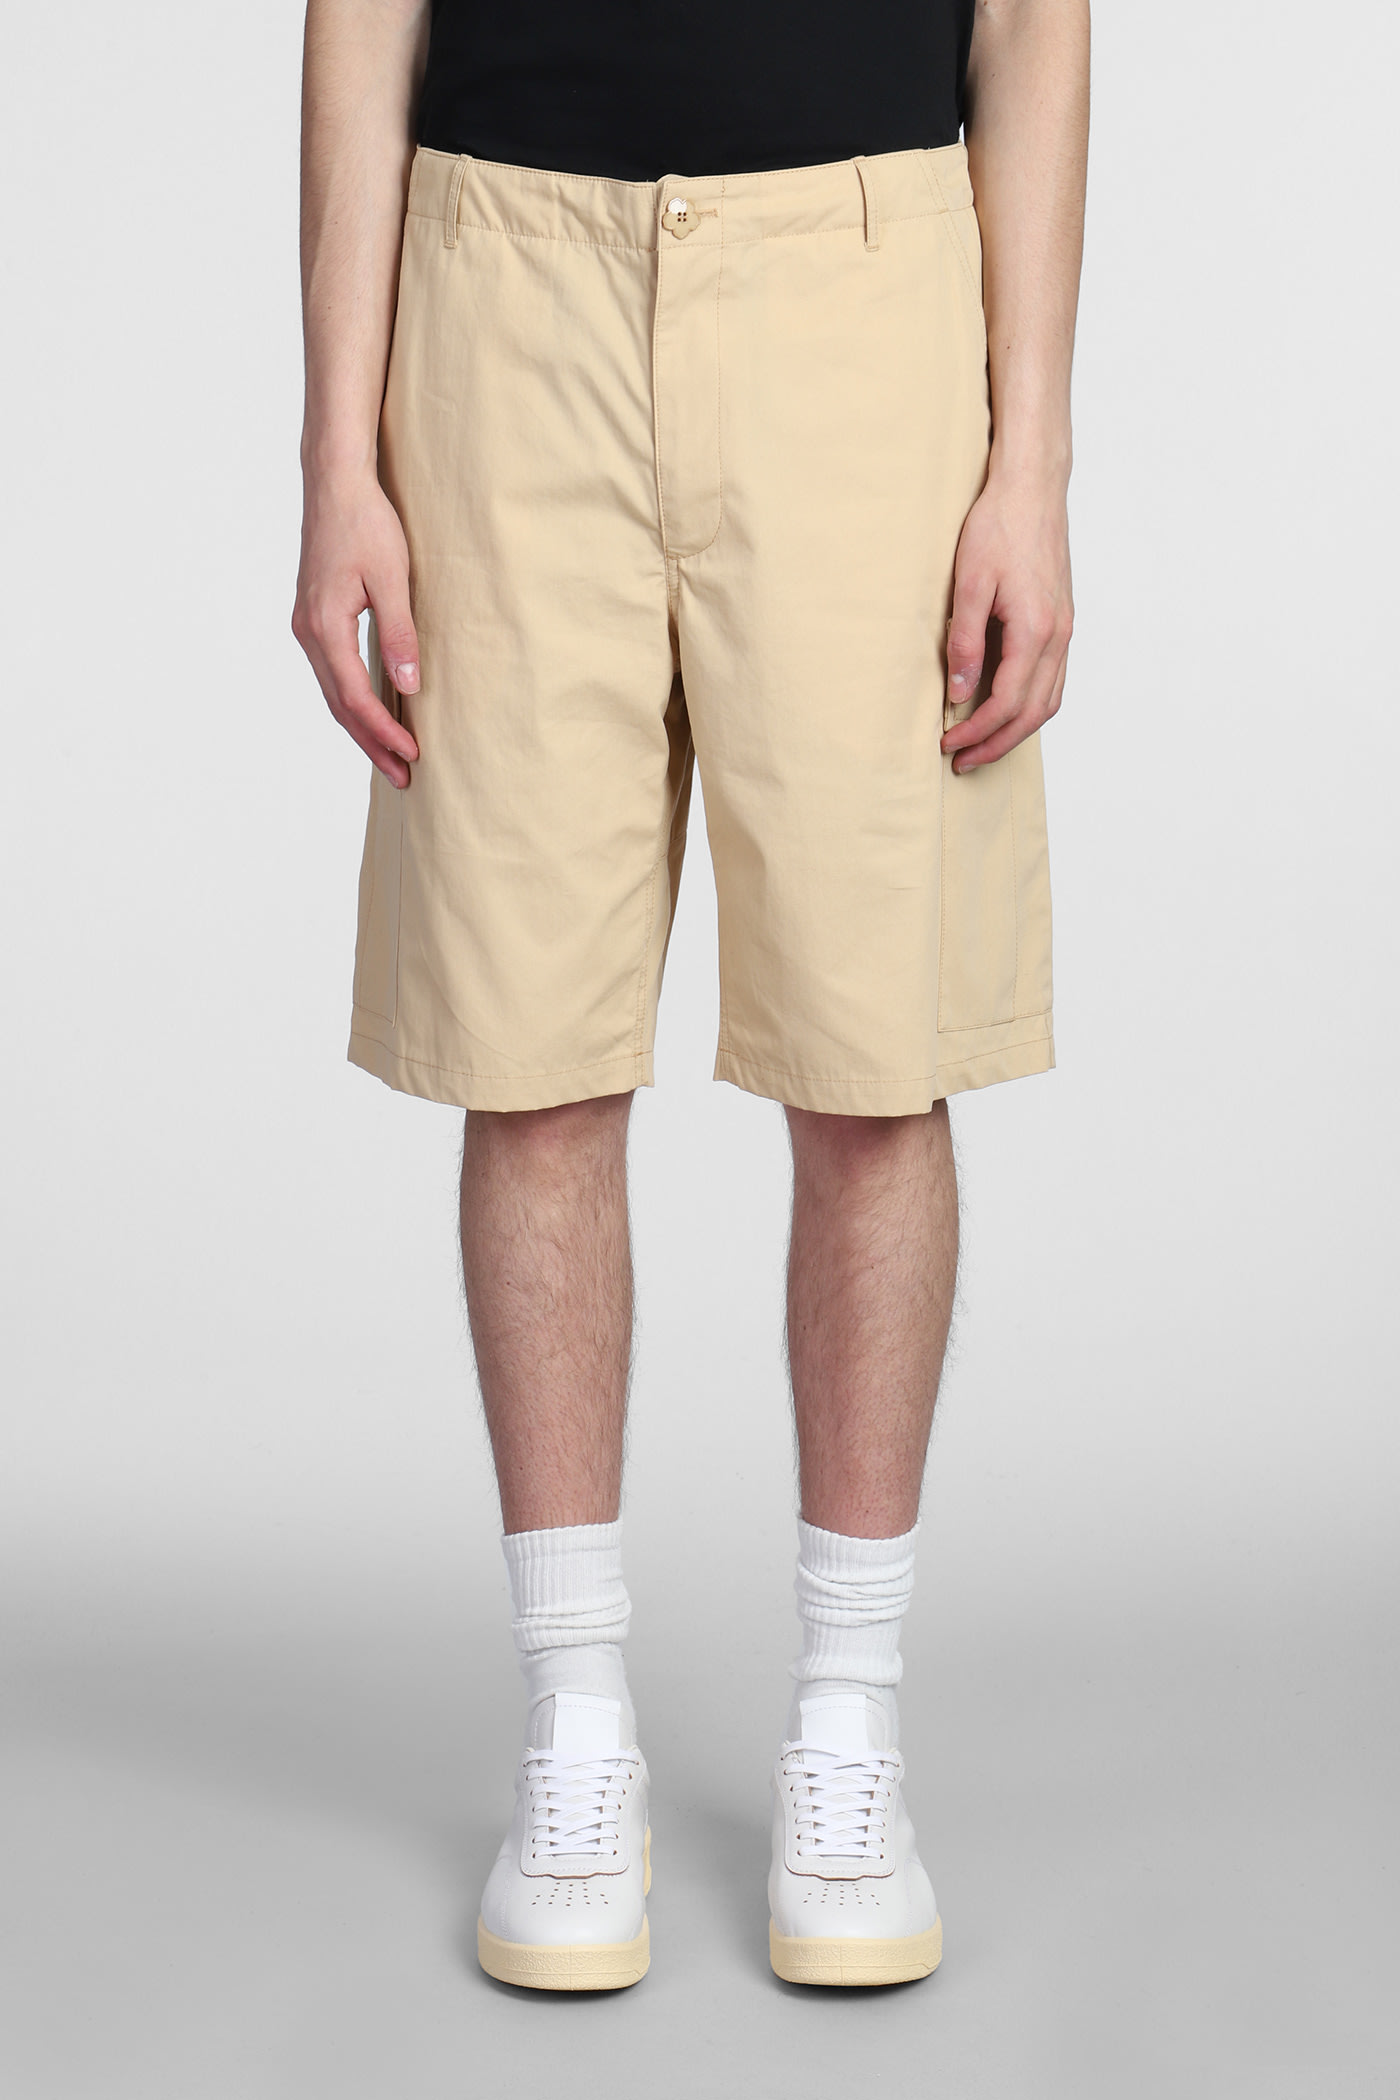 kenzo shorts in beige cotton